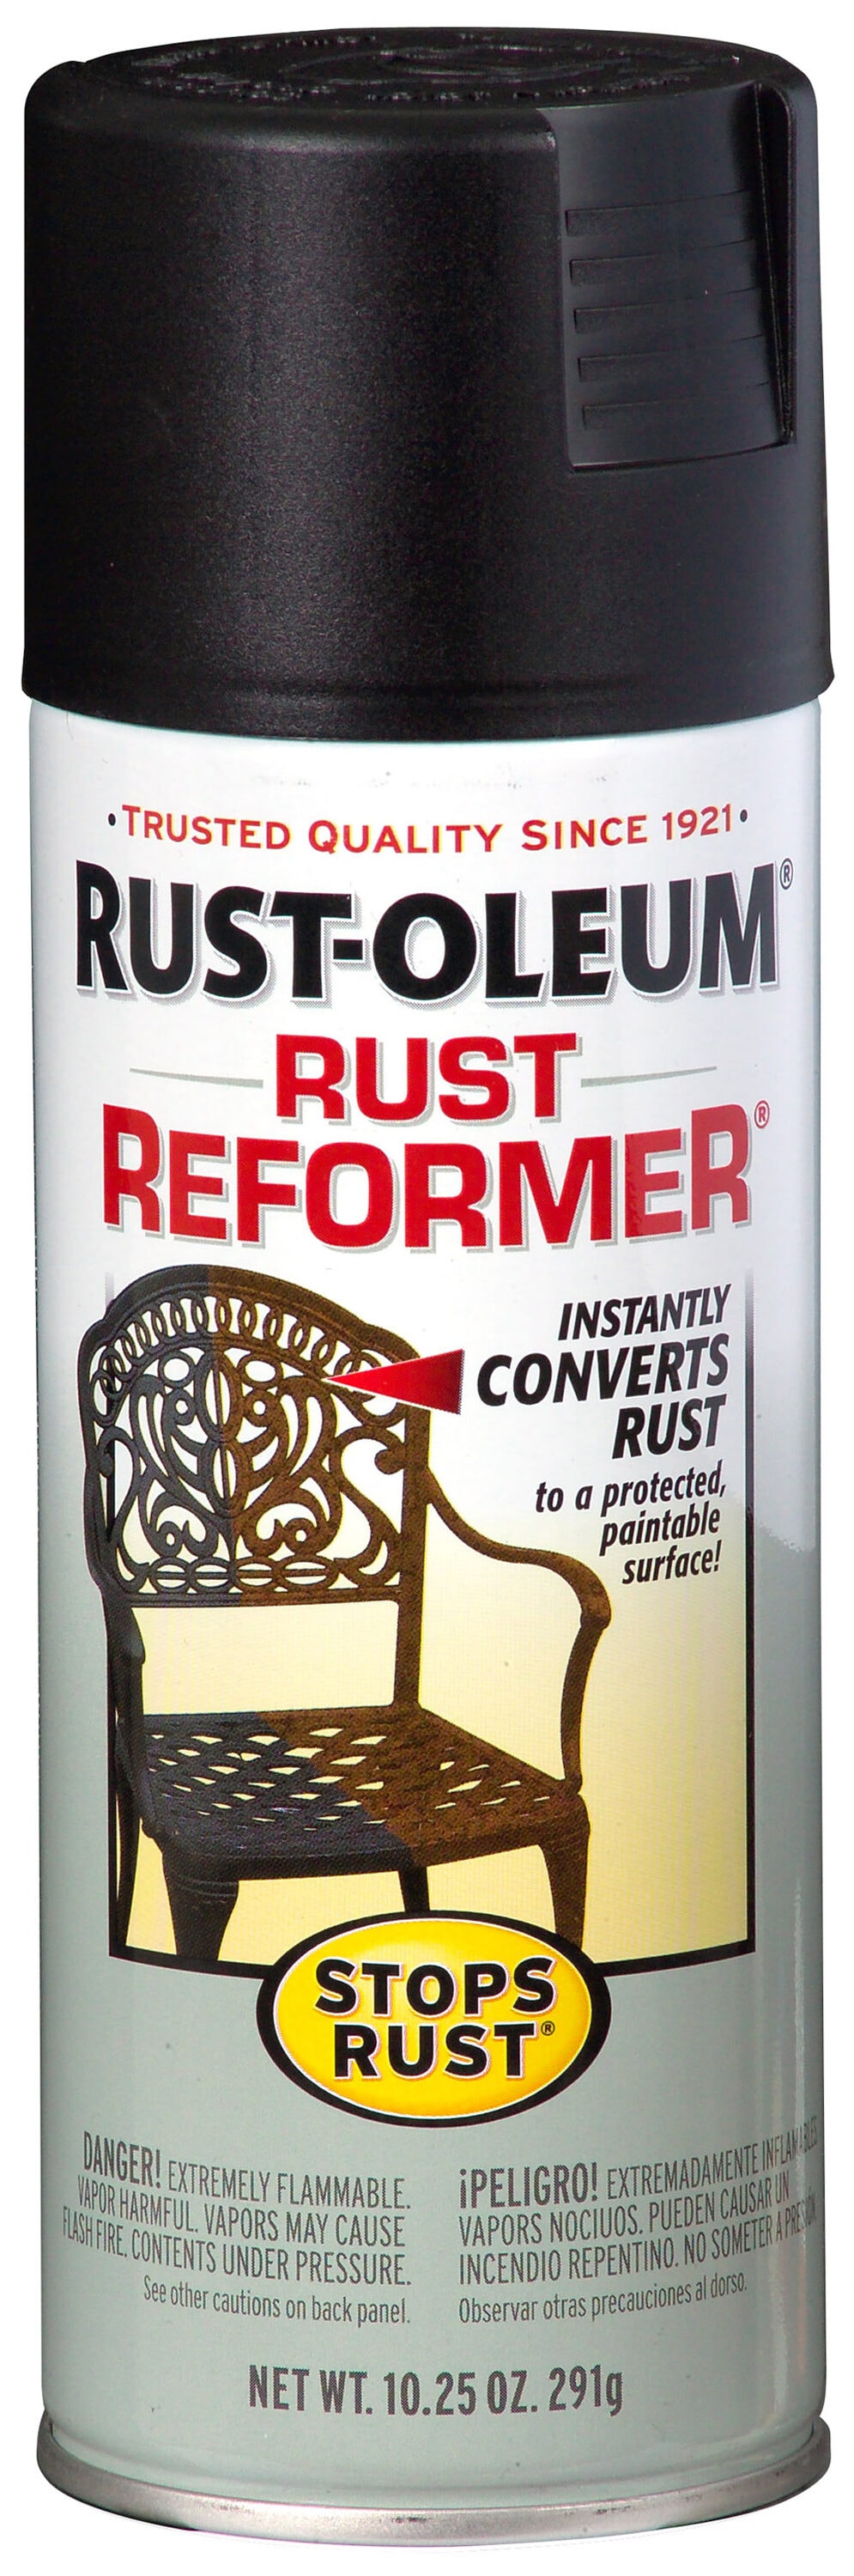 Rust-Oleum Automotive 11 oz. Flat Black Fabric & Vinyl Spray (6-pack)